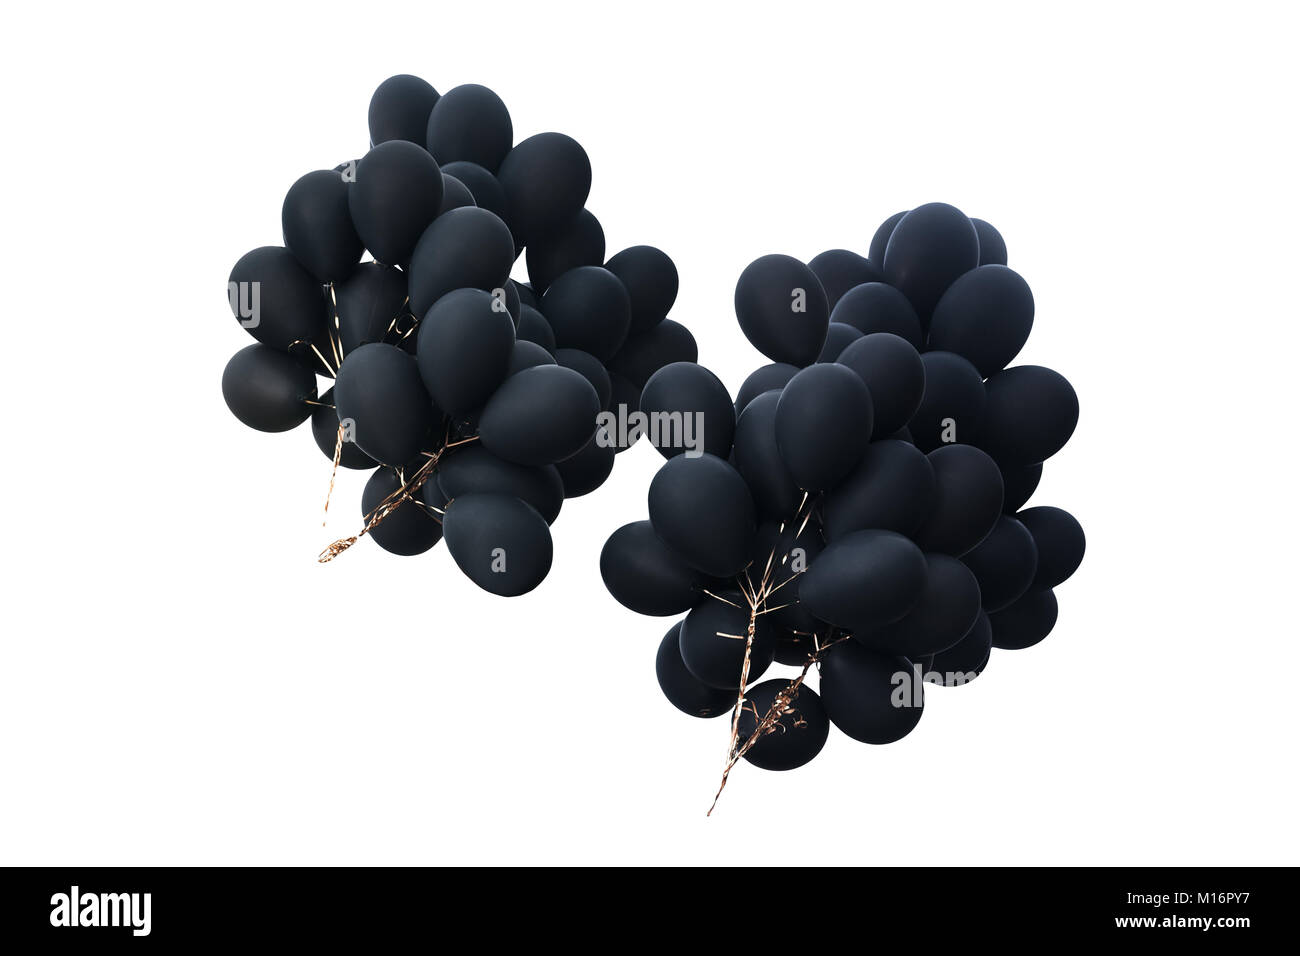 Black balloons isolated on white Stock Photo